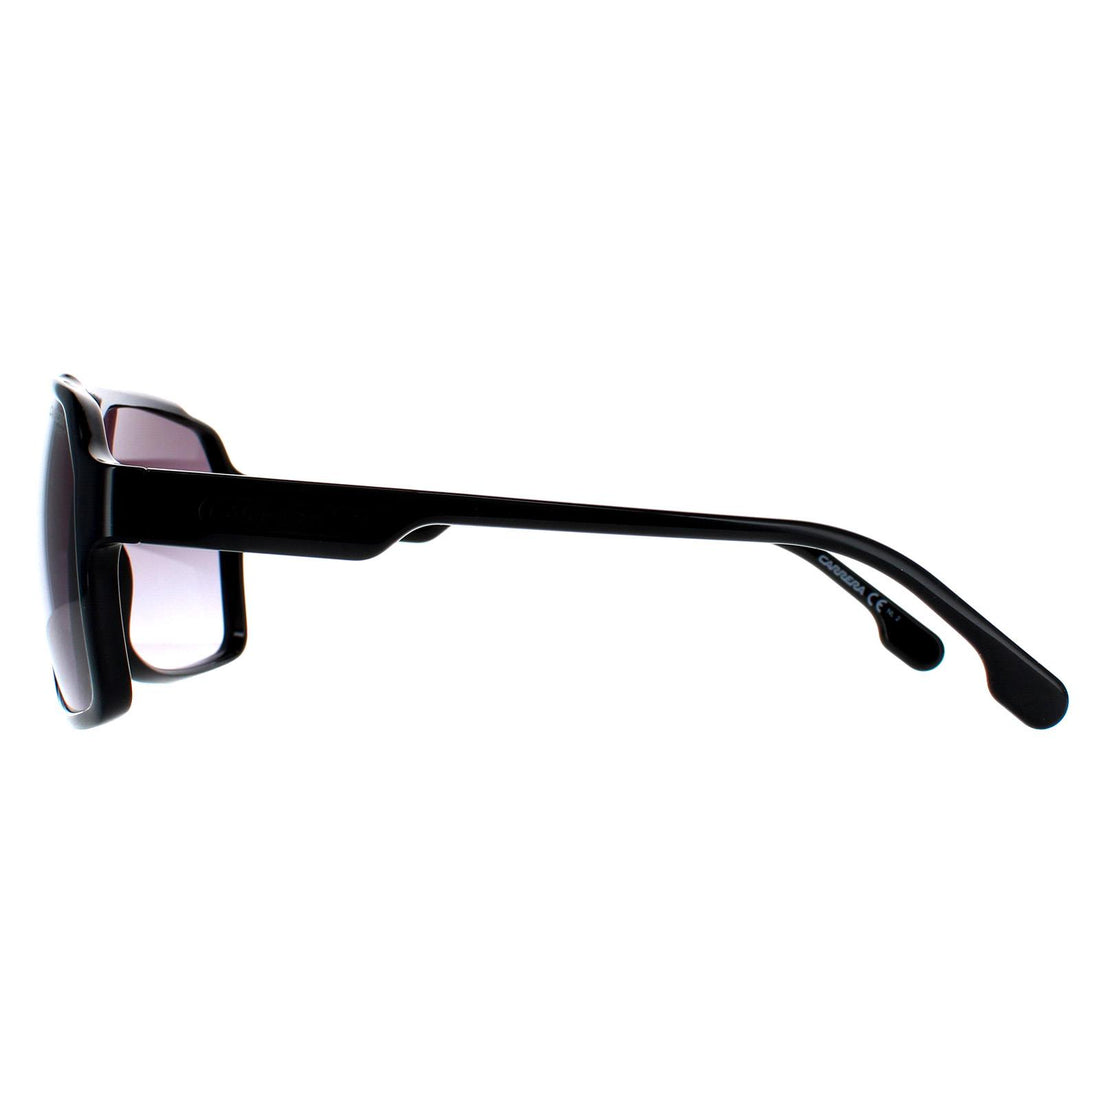 Carrera Sunglasses 1030/S 08A 9O Black Grey Dark Grey Gradient